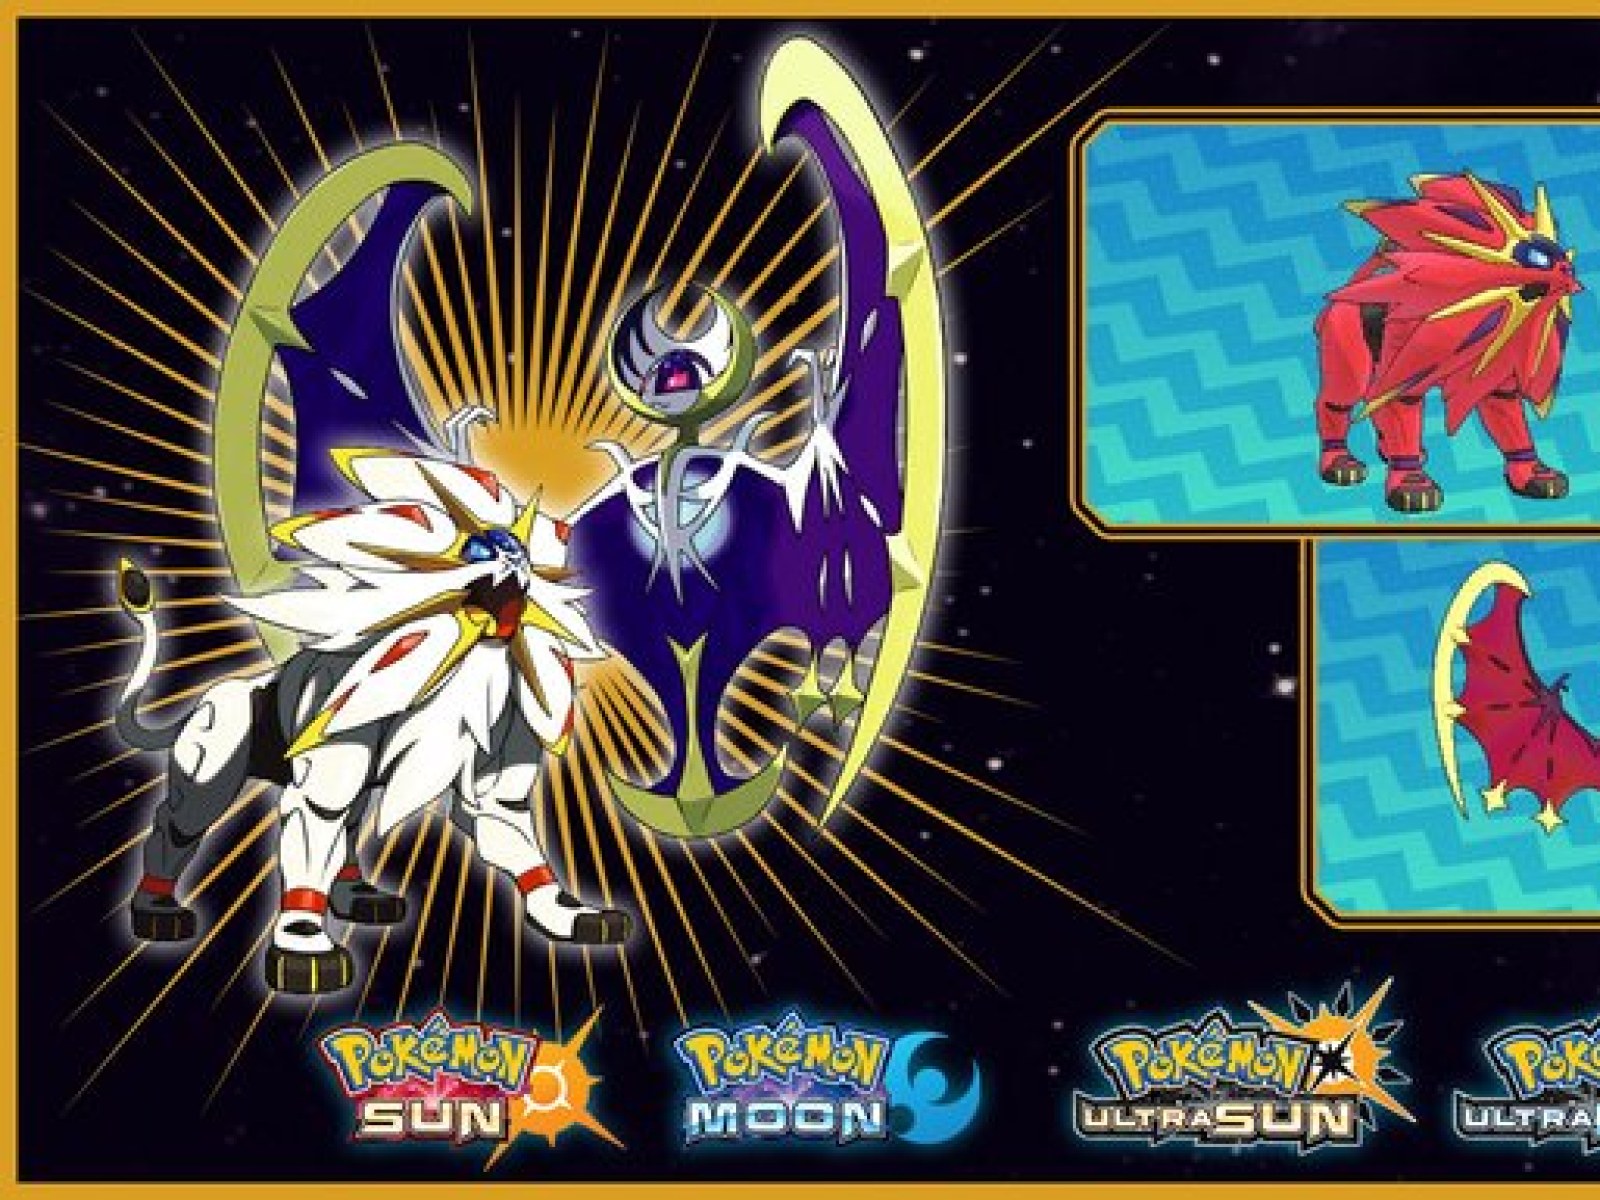 Pokemon Center Sun & Moon Solgaleo & Lunala Deck Box